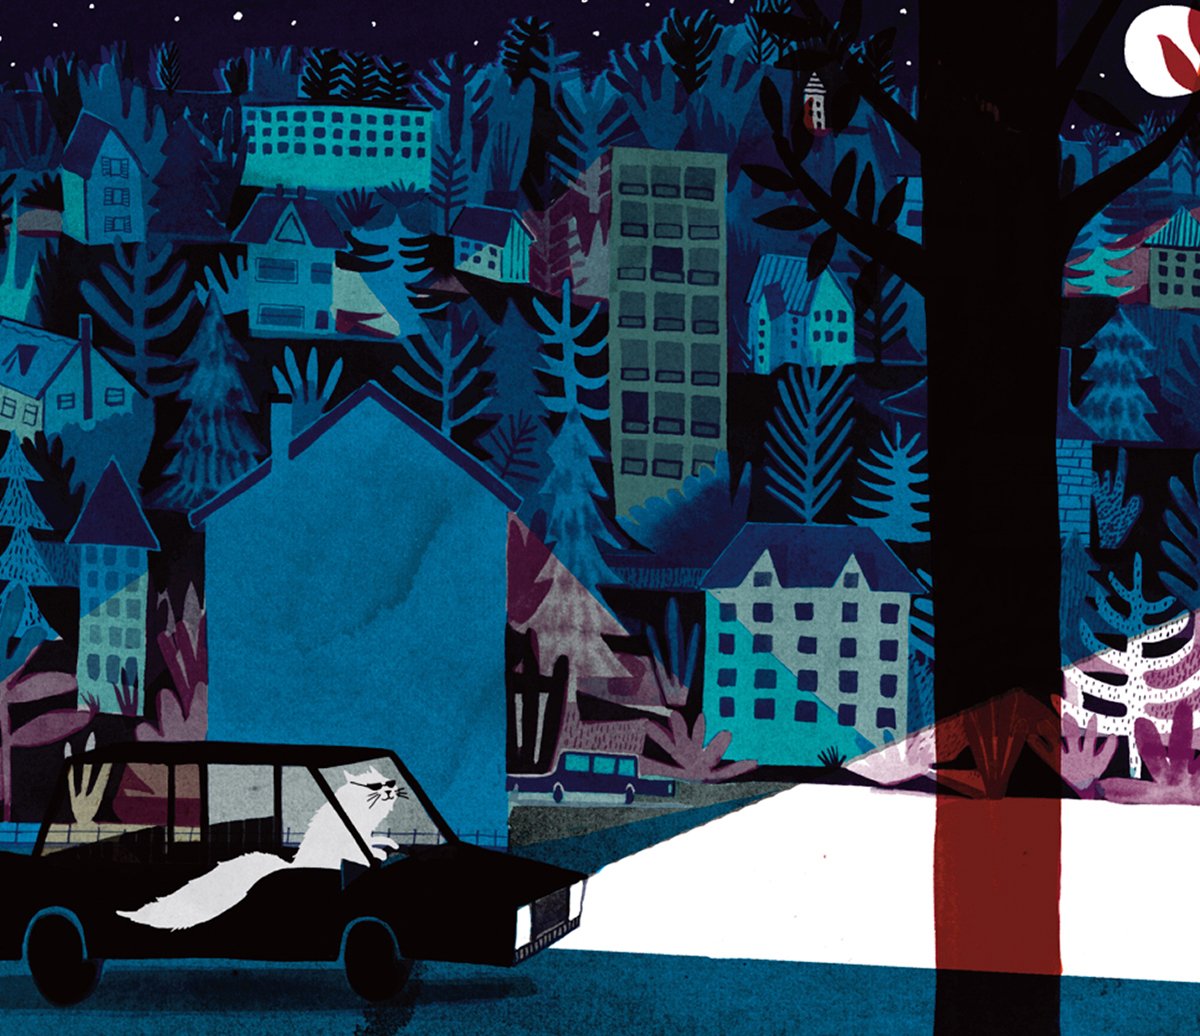 lydia-corry-cat-driving-car-at-night-illustration.jpg